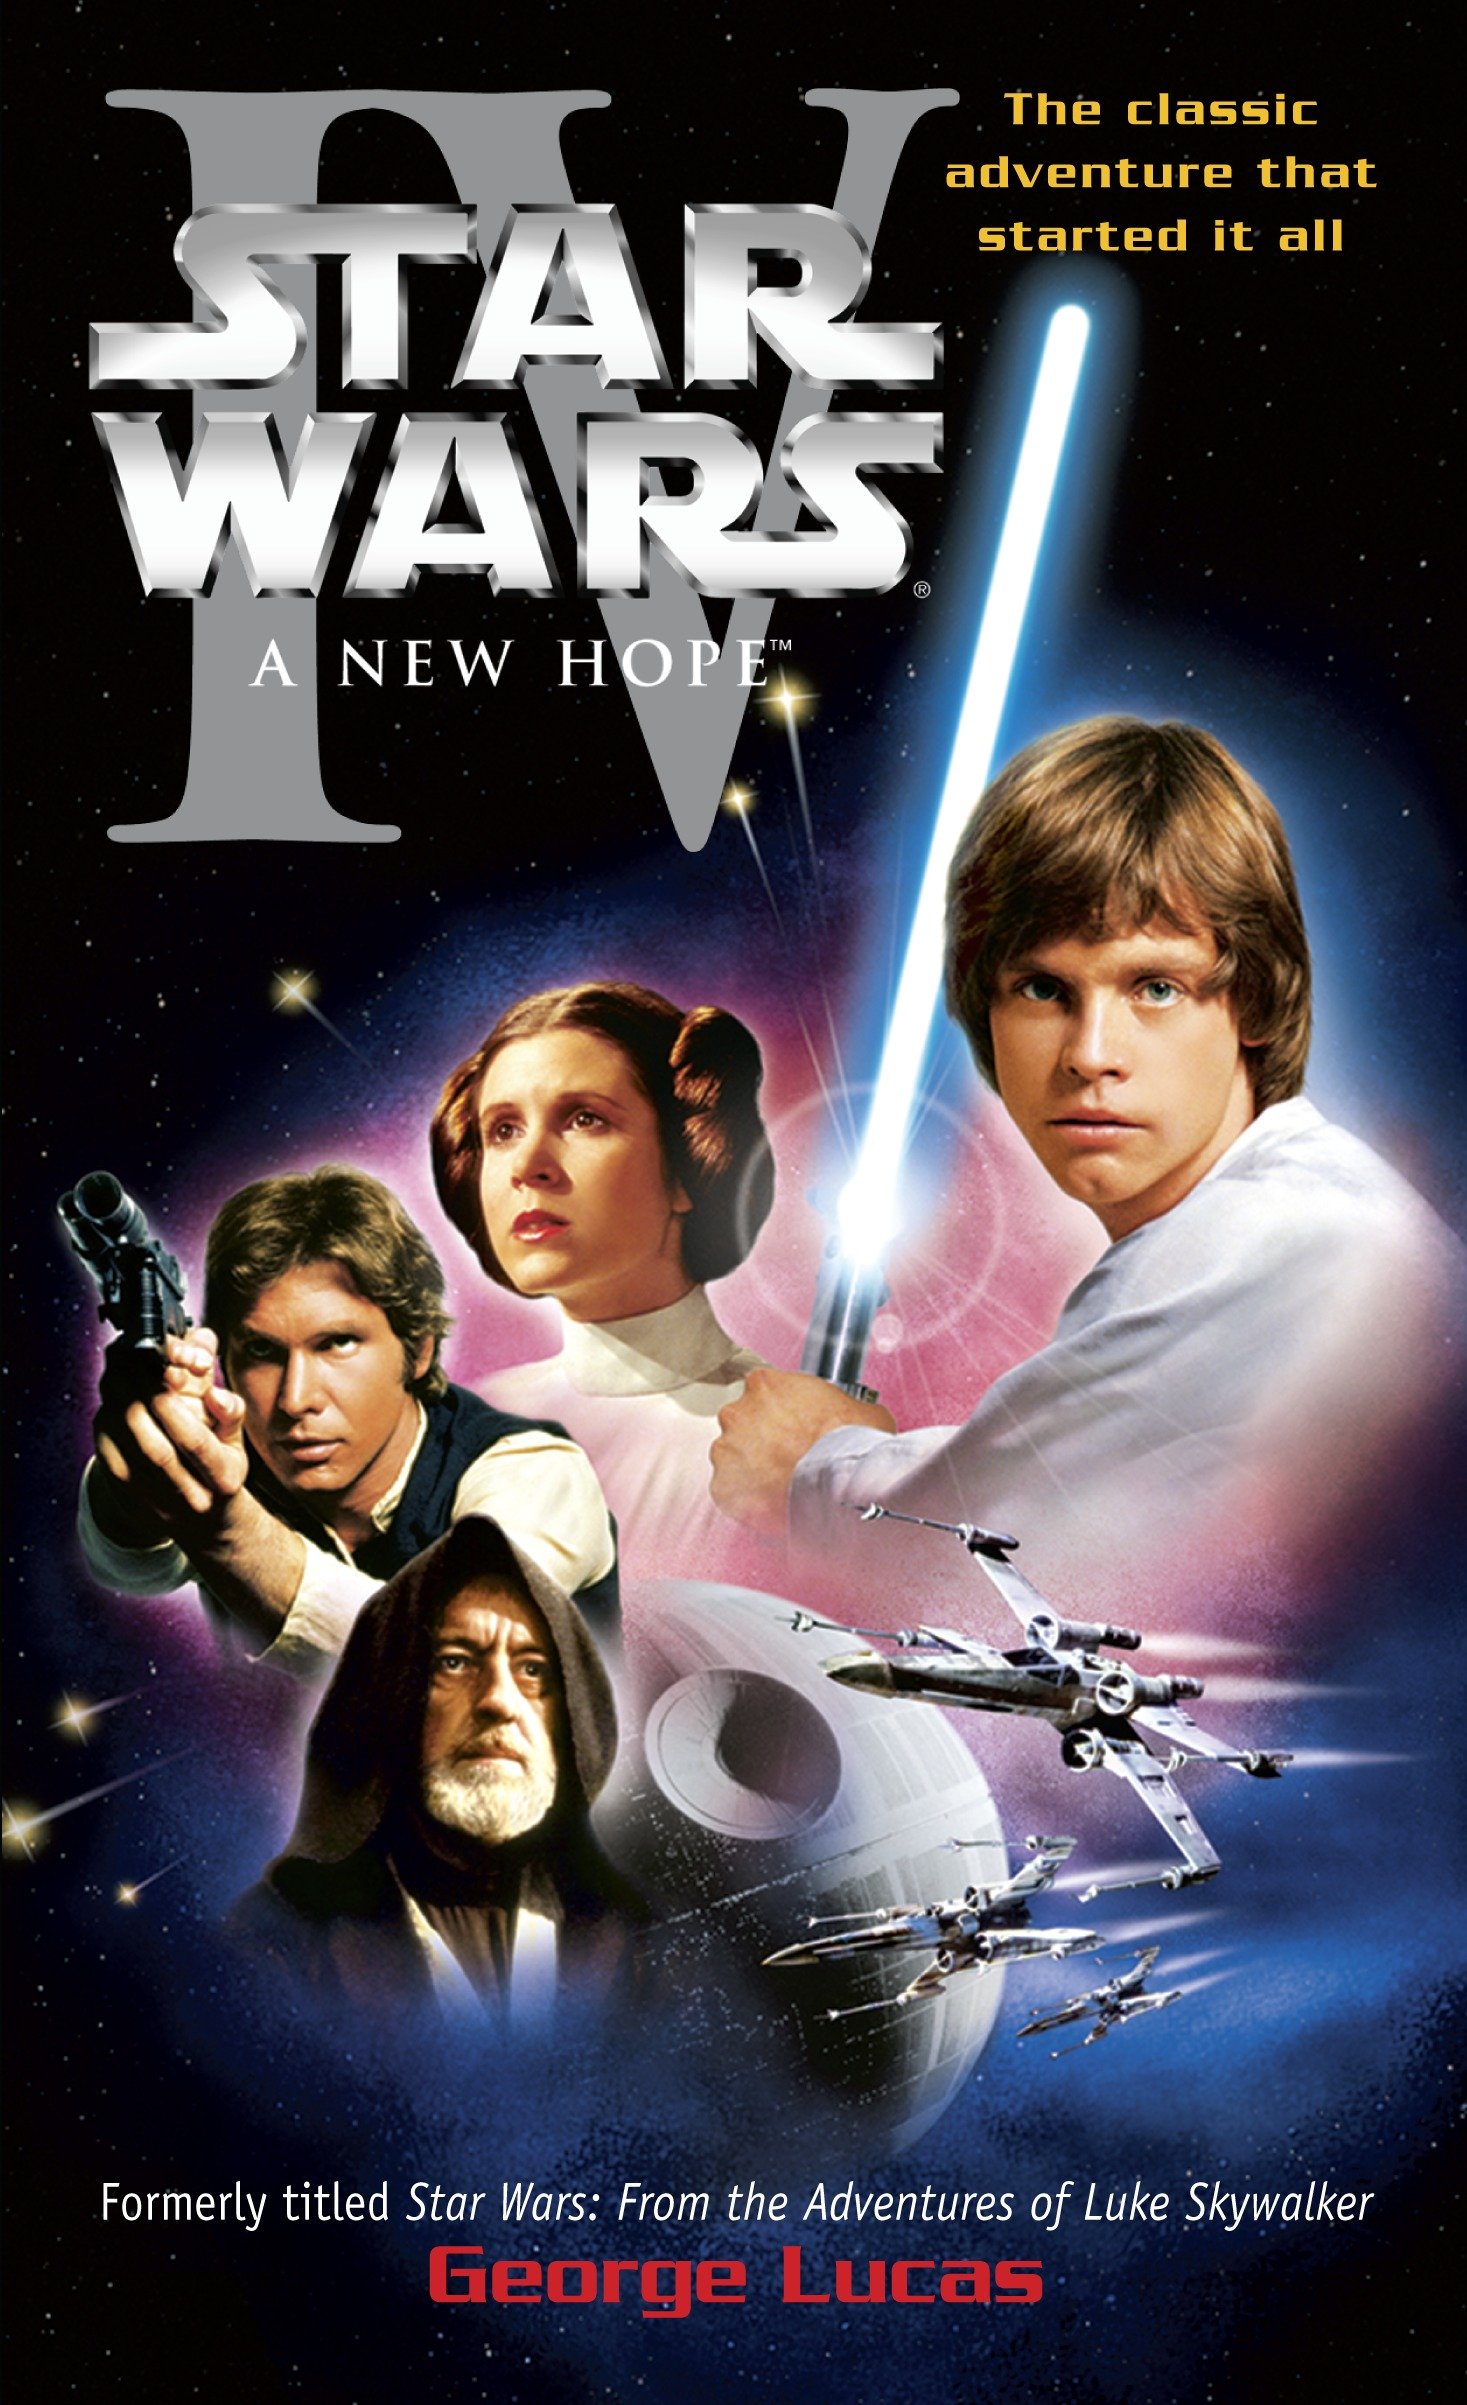 A New Hope: Star Wars Episode Iv